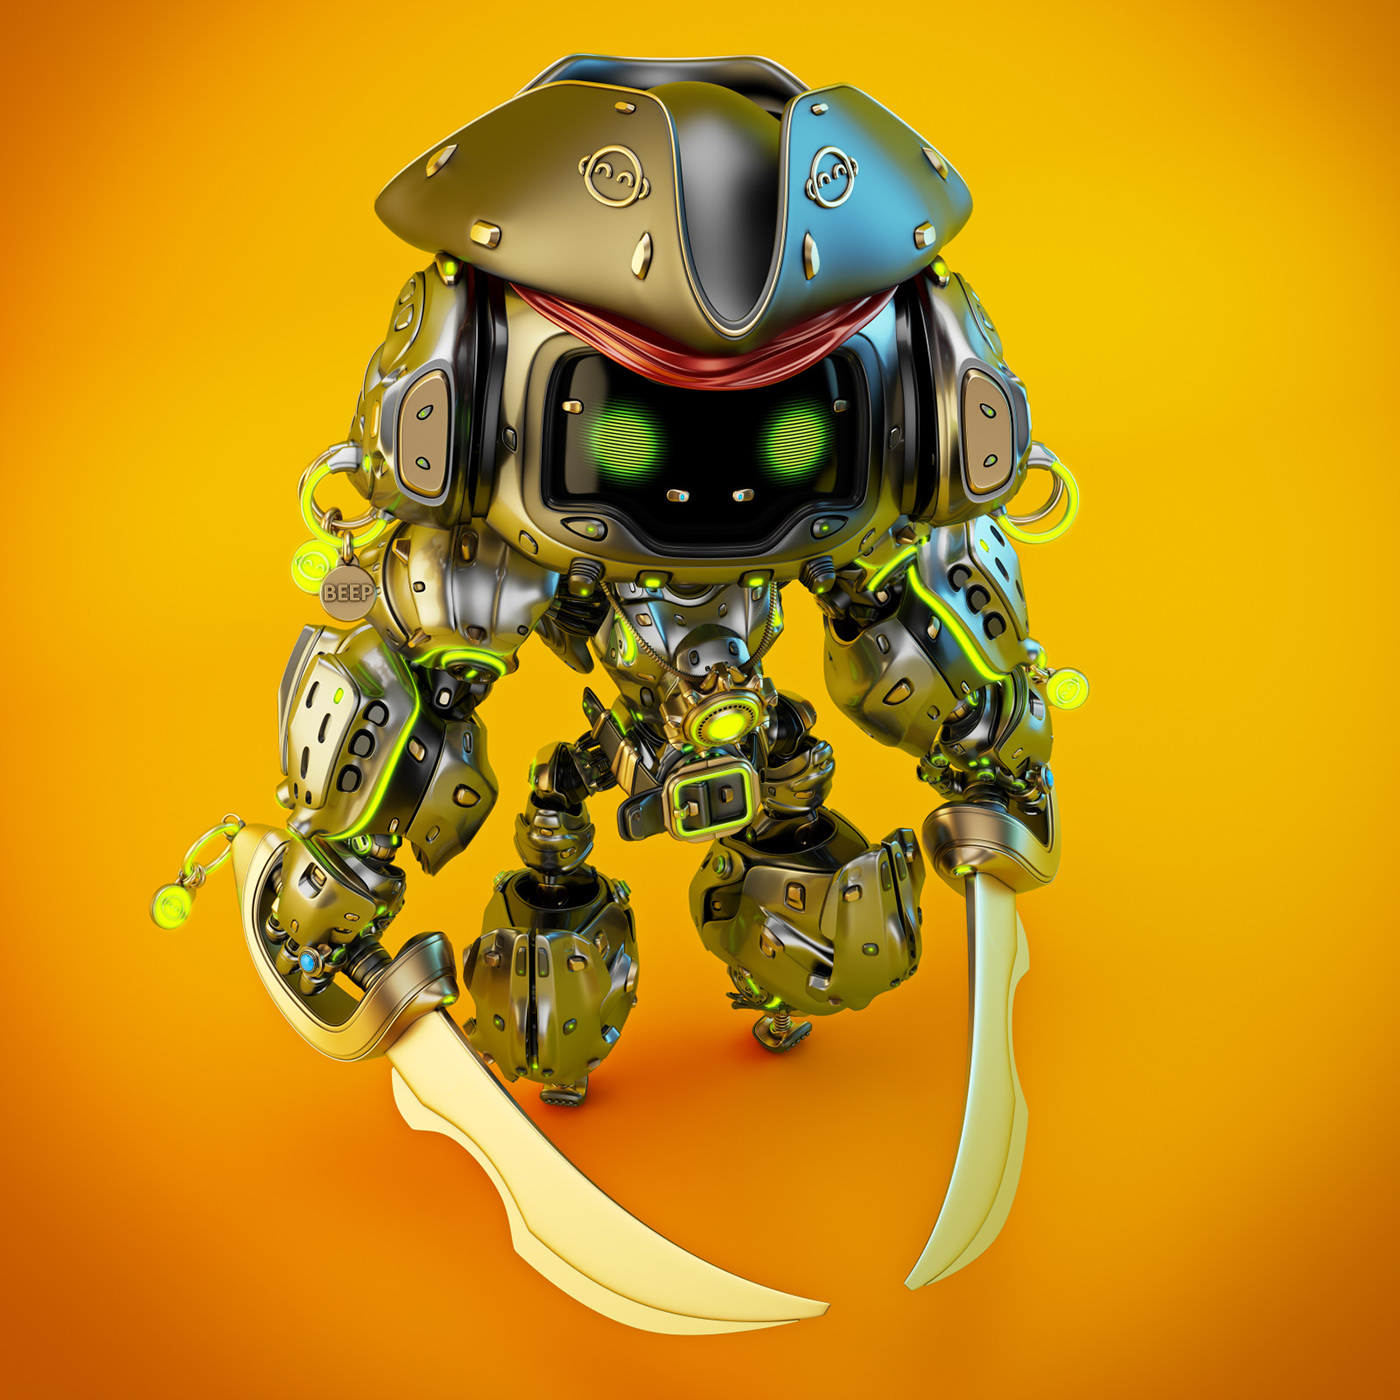 pirate bot robot hat weapons captain Character Ocean mech droid